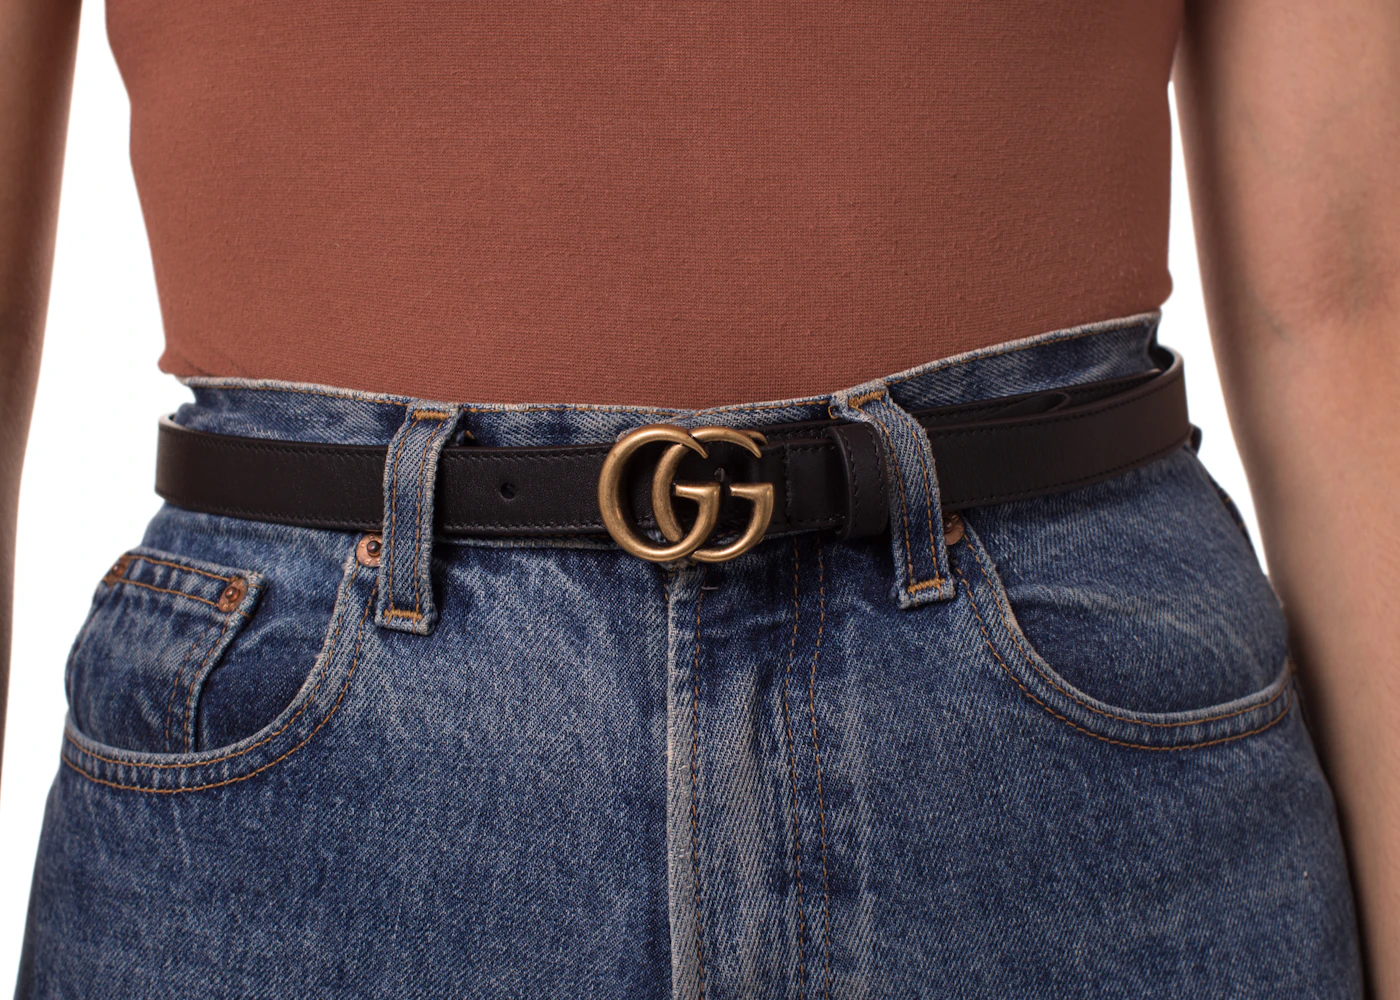 Gucci Double G Wide Leather Belt Pearl Buckle 1.5 Width Black